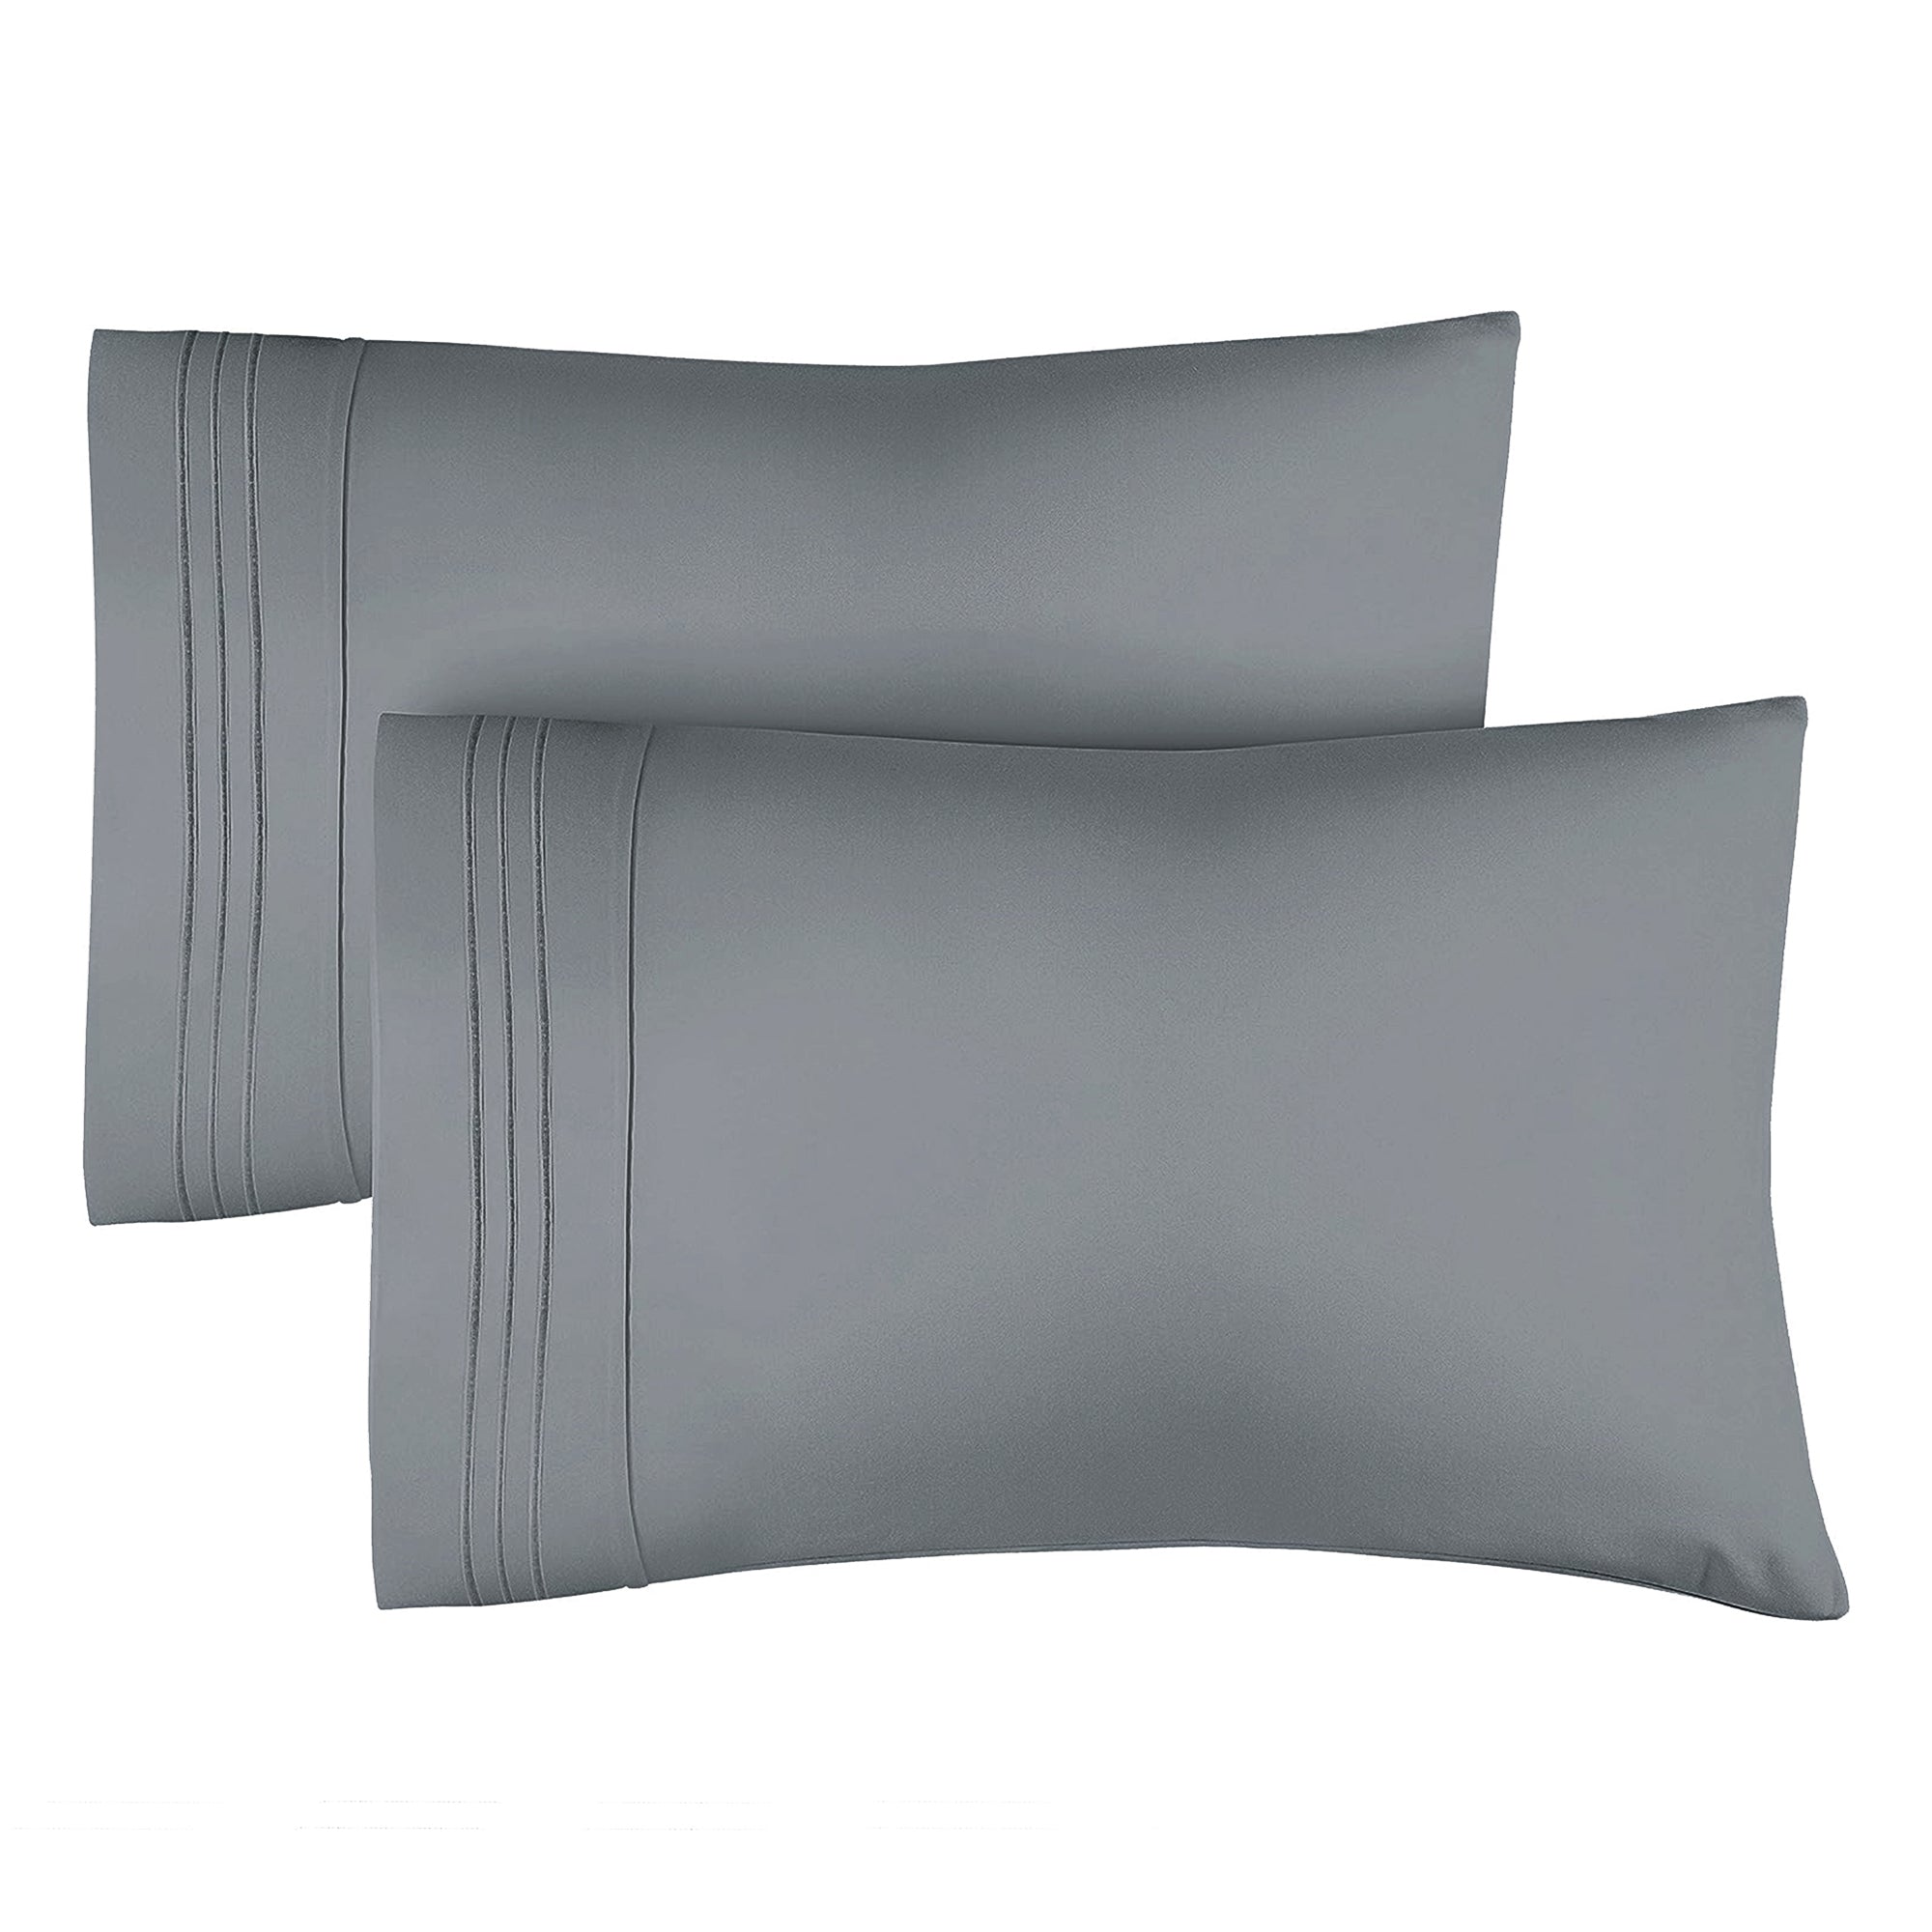 2 Pillowcase Set - Steel Blue